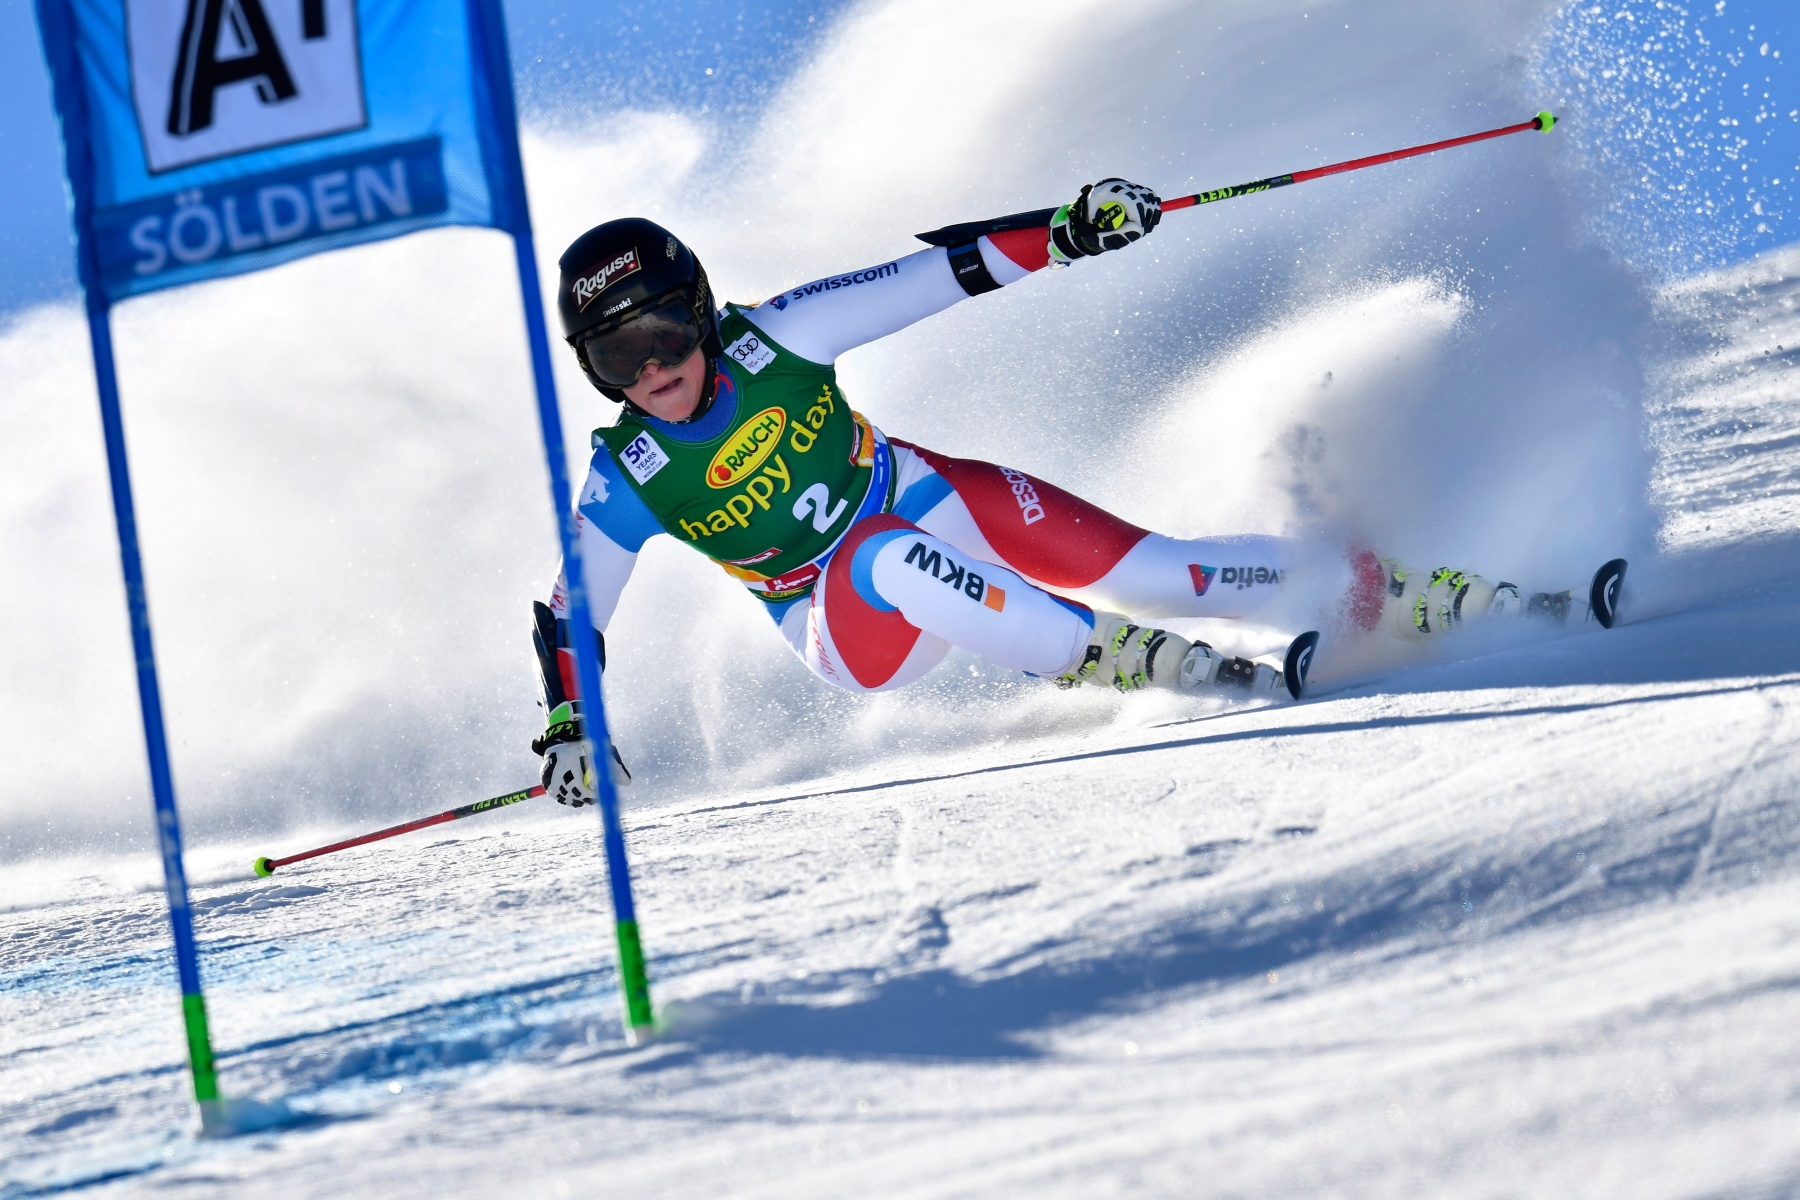 Lara Gut of Switzerland in action during the first run of the women's Giant Slalom race of the FIS Alpine Ski World Cup season on the Rettenbach glacier, in Soelden, Austria, Saturday, October 22, 2016. (KEYSTONE/Gian Ehrenzeller) SKI ALPIN WELTCUP 2016/17 SOELDEN